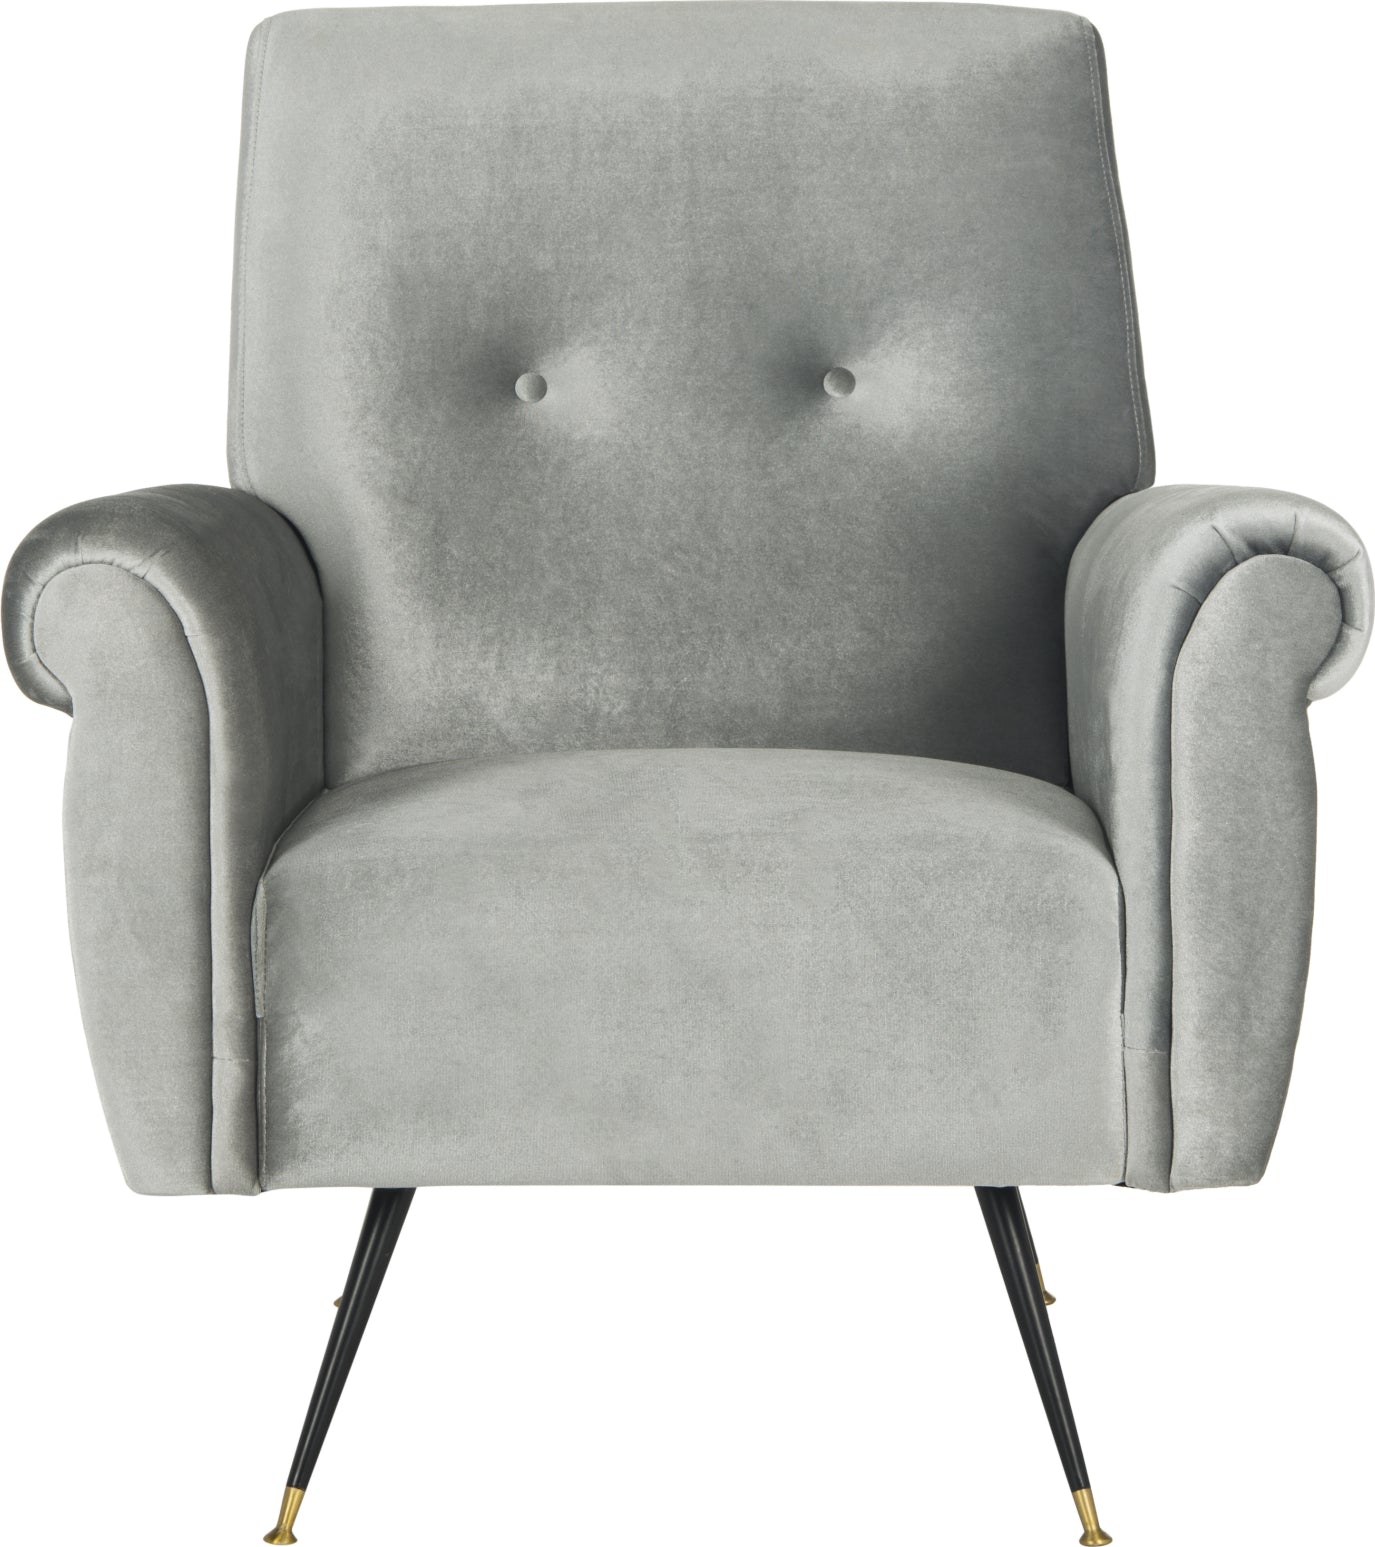 Safavieh Mira Retro Mid Century Velvet Accent Chair Light Grey Furniture main image